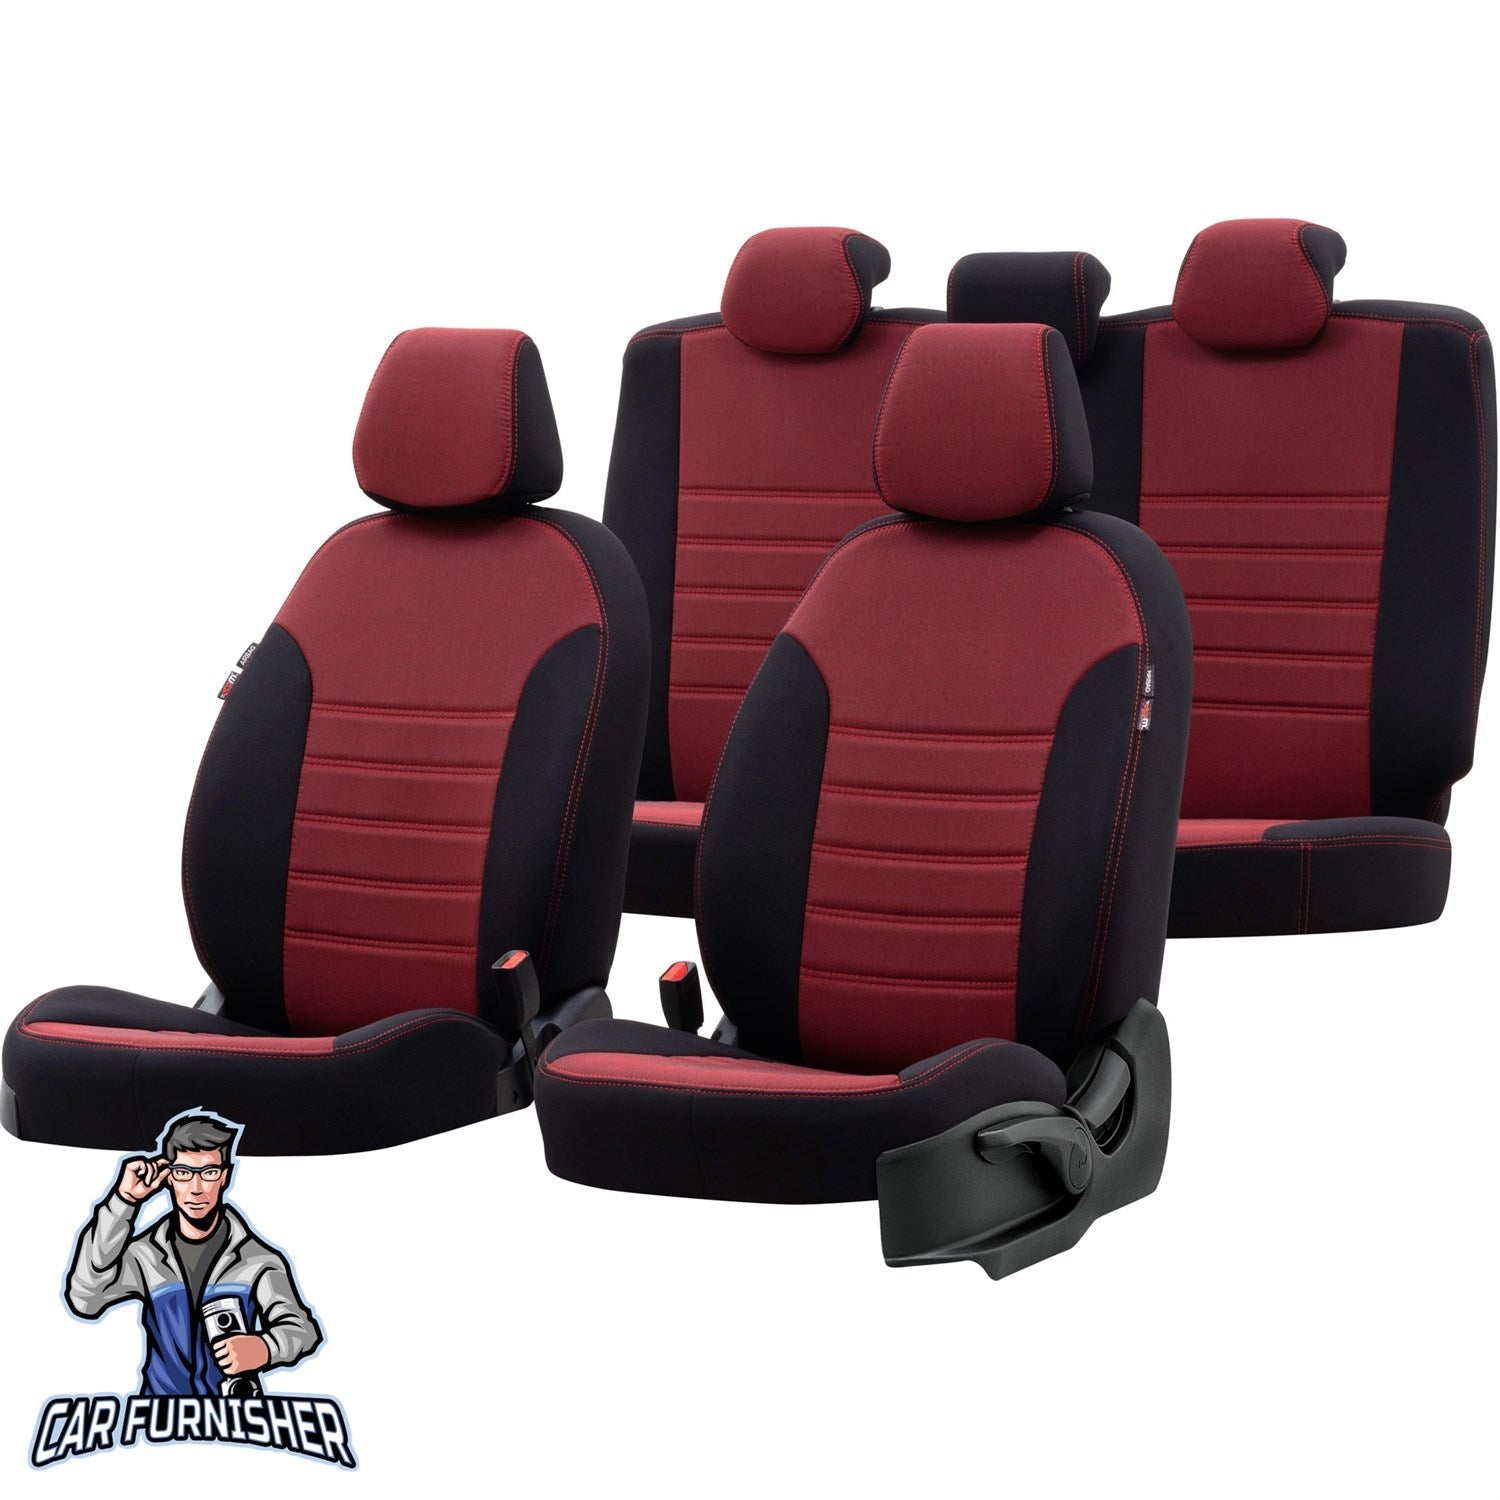 Fiat Ducato Seat Covers Original Jacquard Design Red Jacquard Fabric